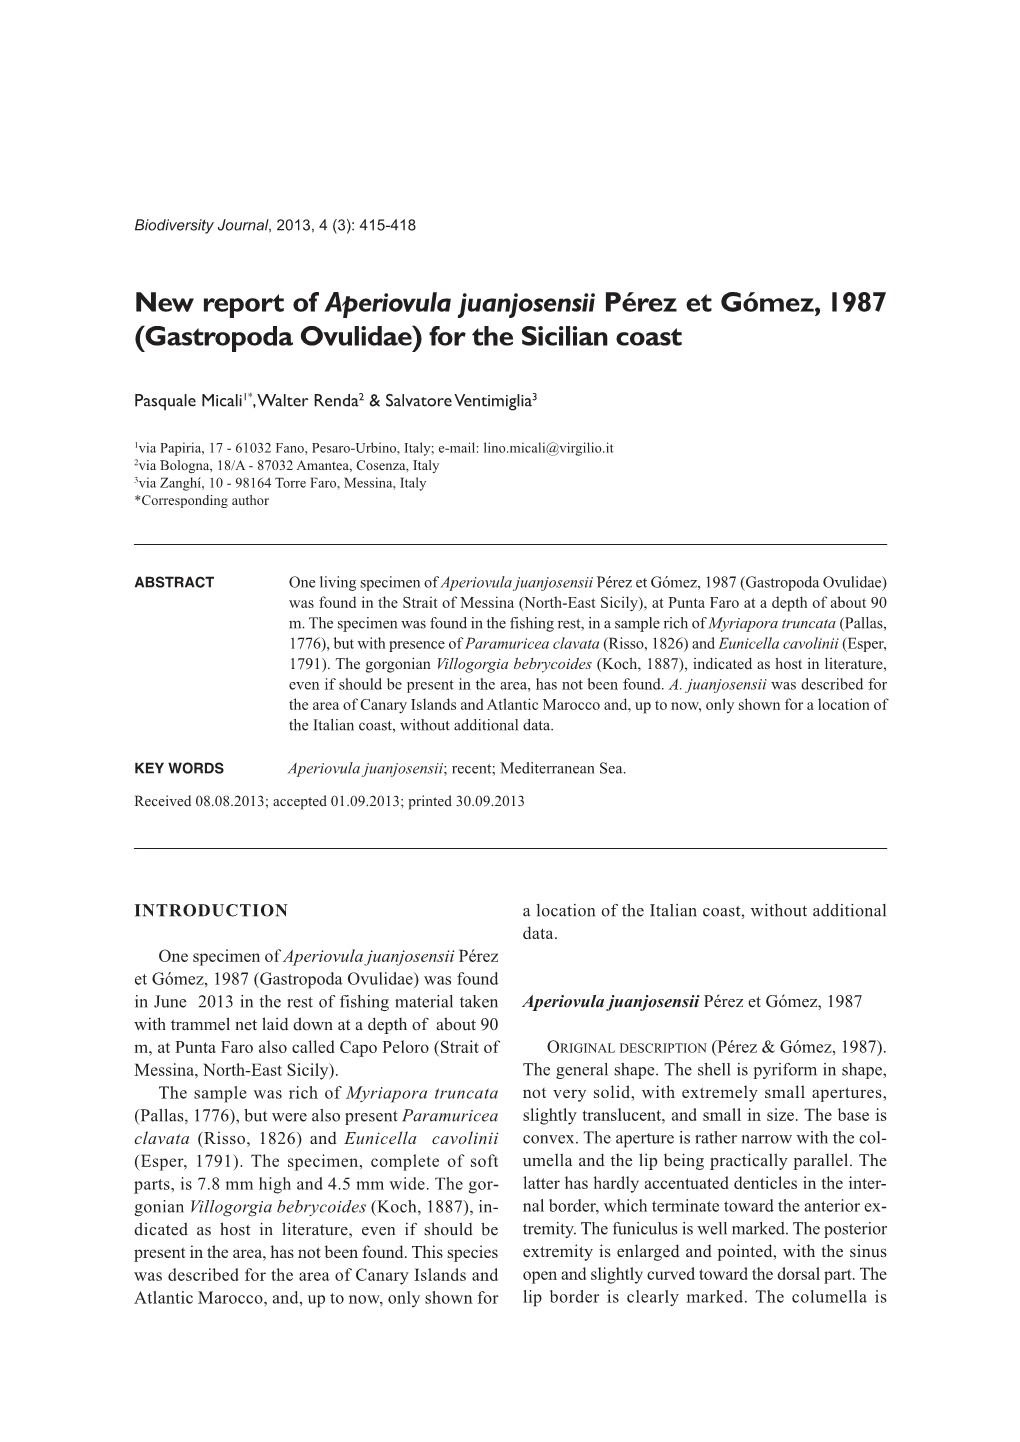 New Report of Aperiovula Juanjosensii Pérez Et Gómez, 1987 (Gastropoda Ovulidae) for the Sicilian Coast